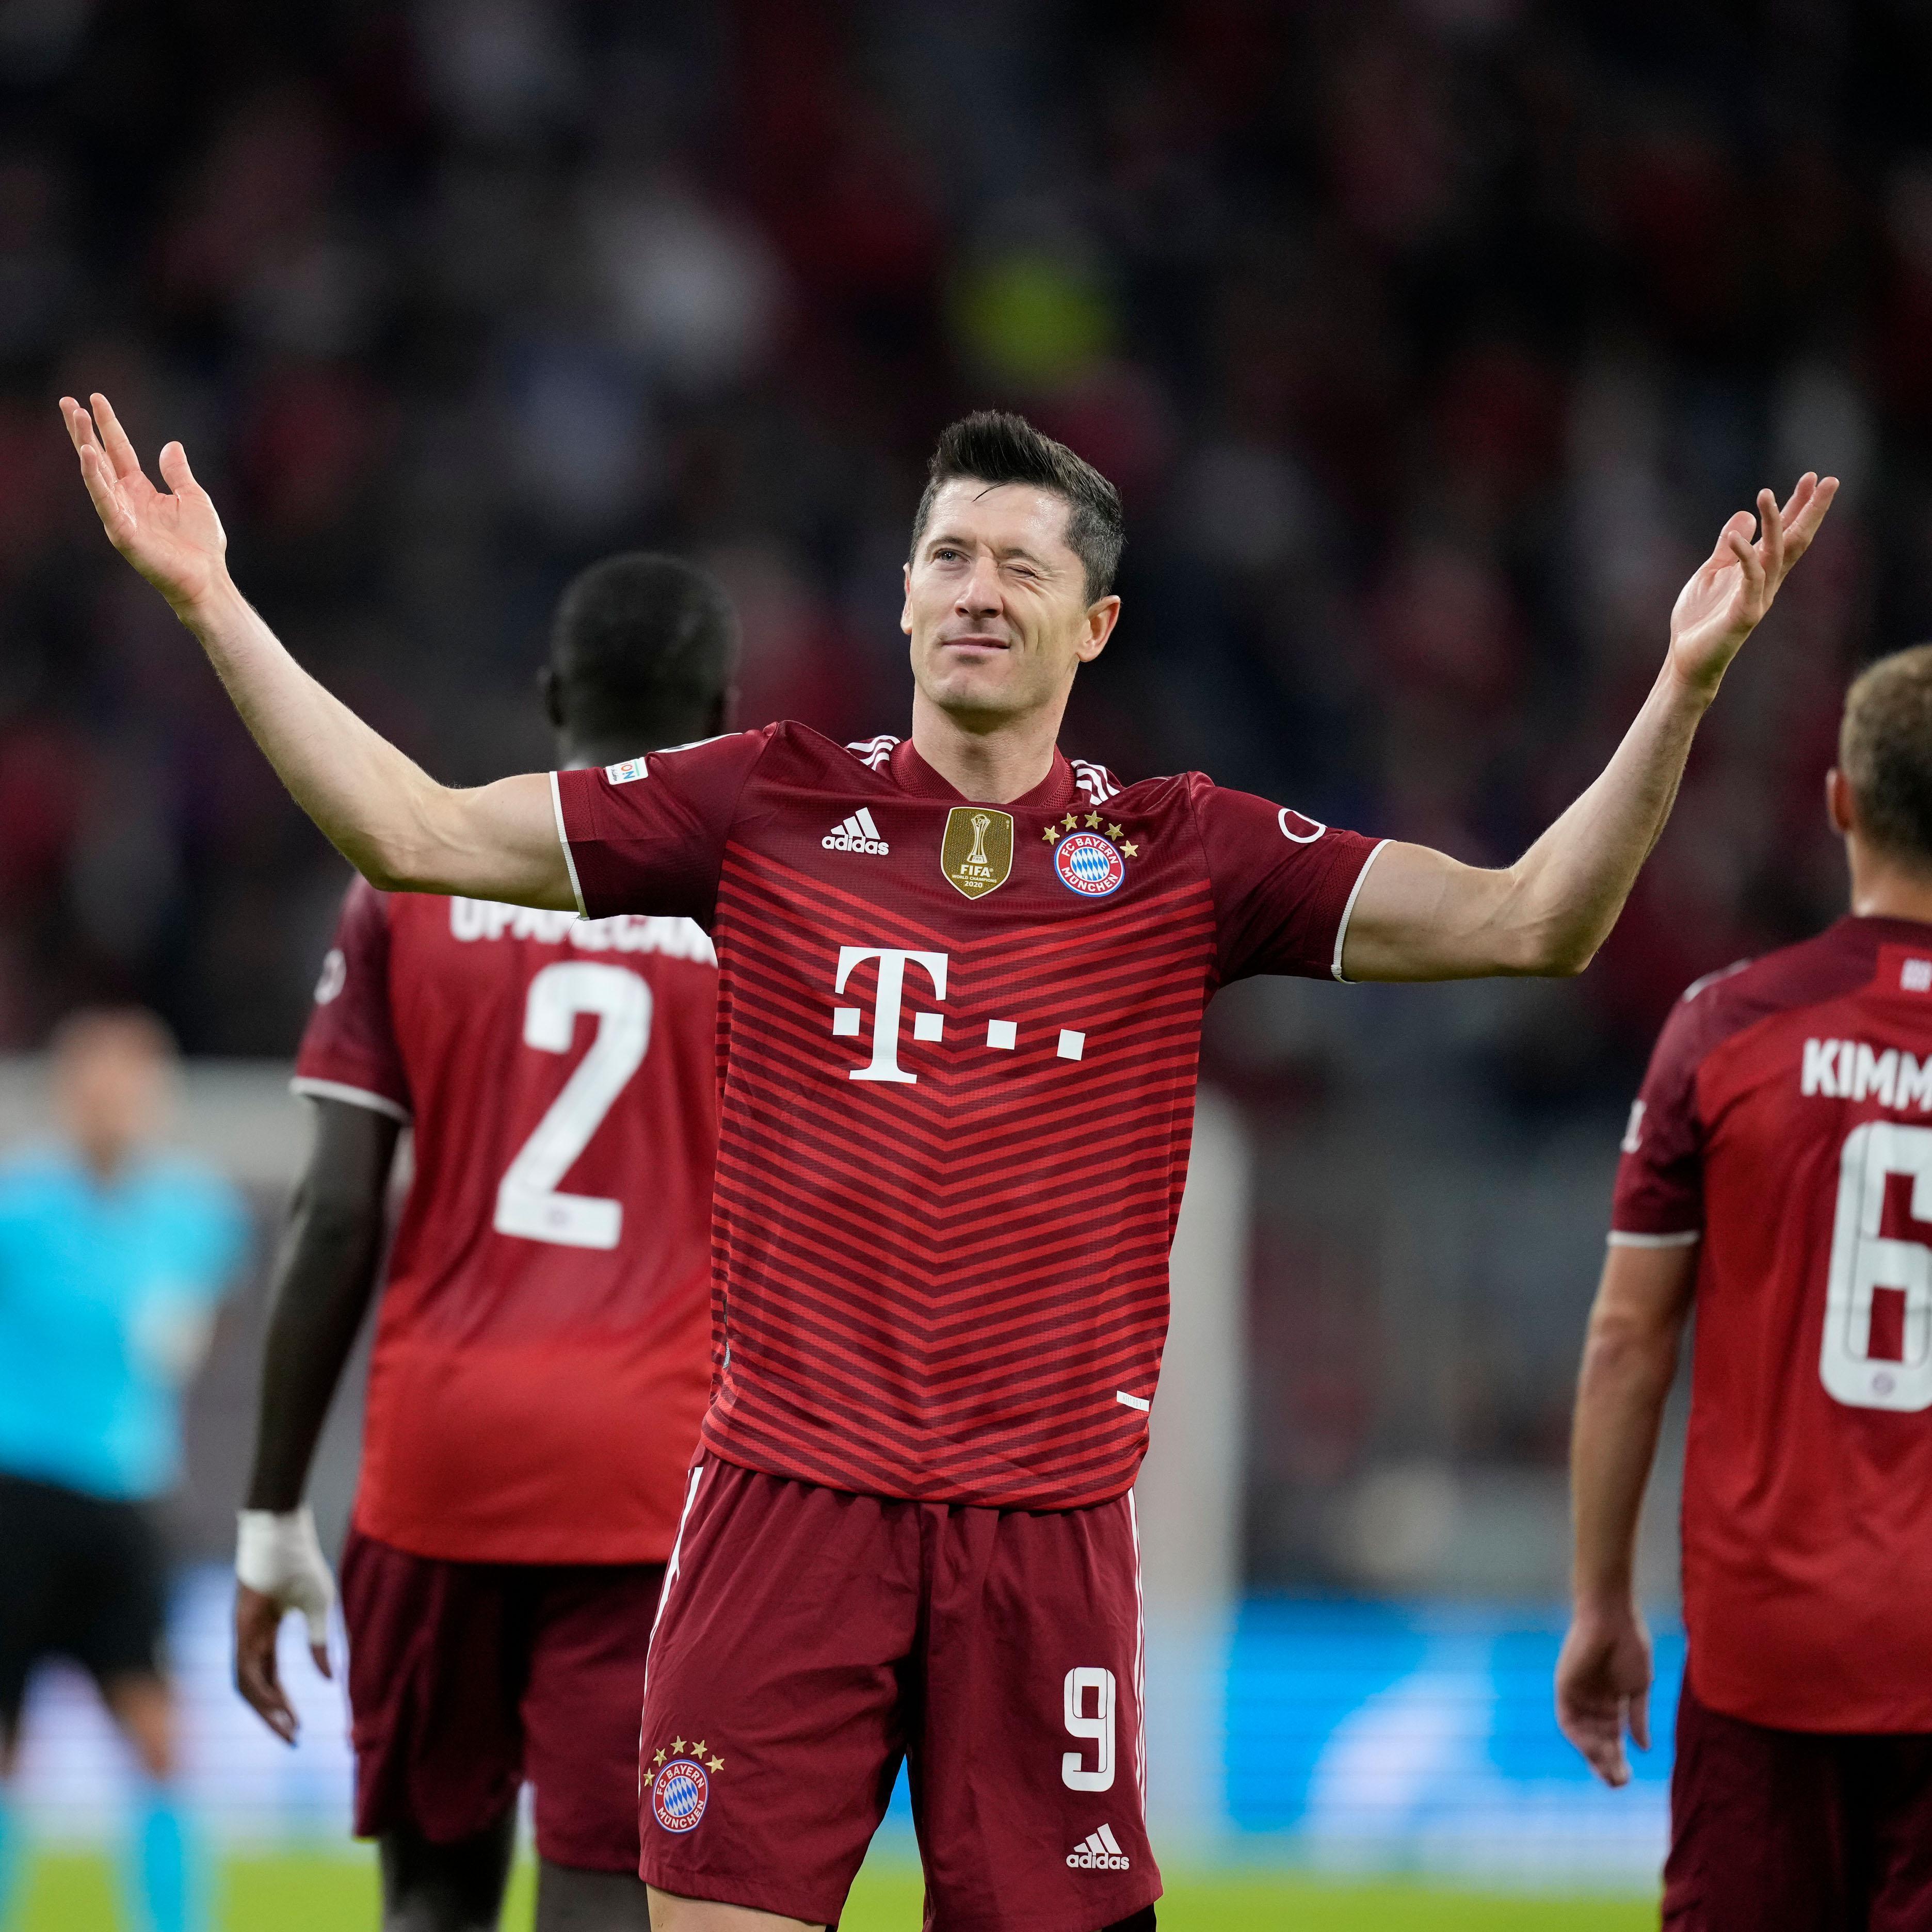 (ÖZET) Bayern Münih-Dinamo Kiev maç sonucu: 5-0